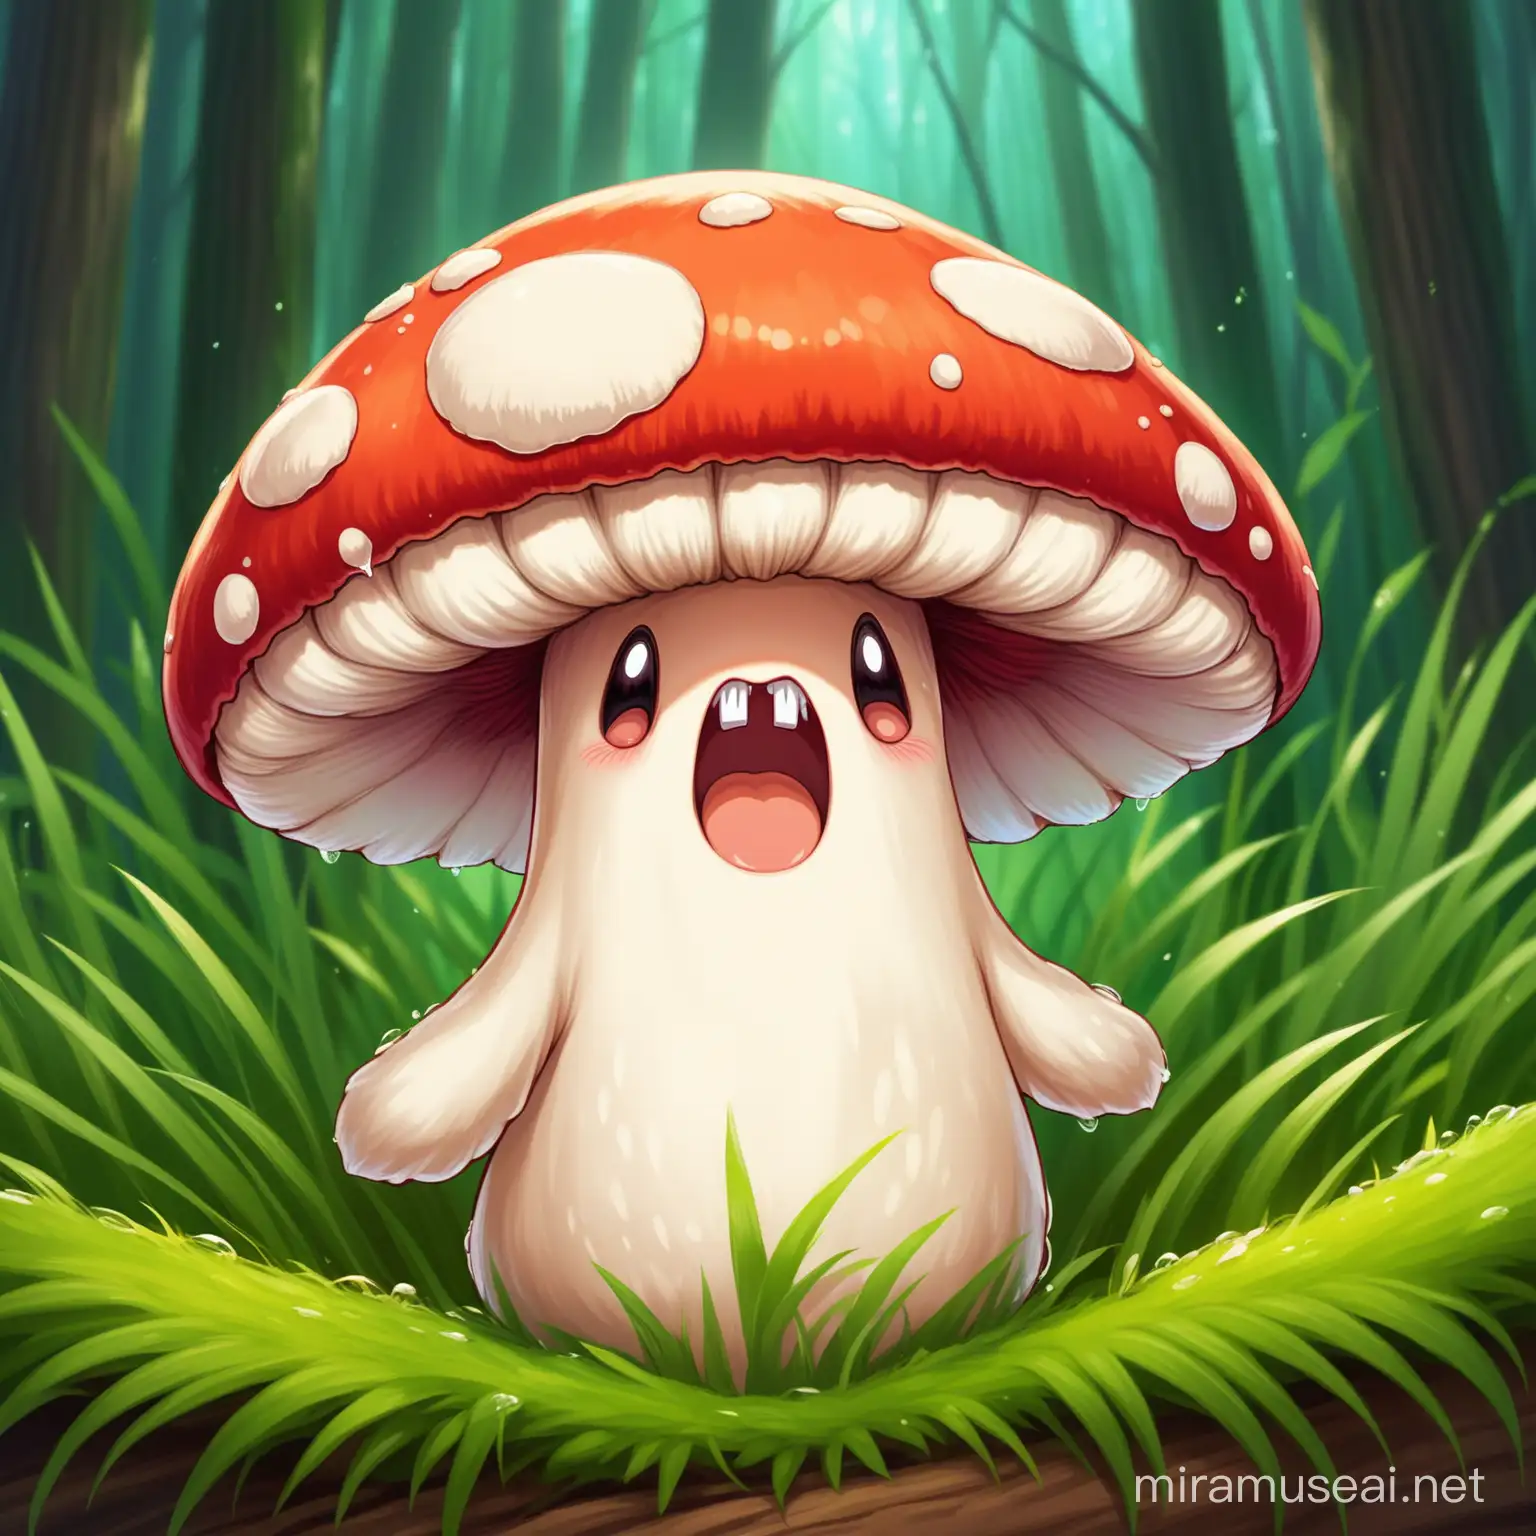 Cute Screaming Mushroom Illustration Whimsical Fungi Artwork